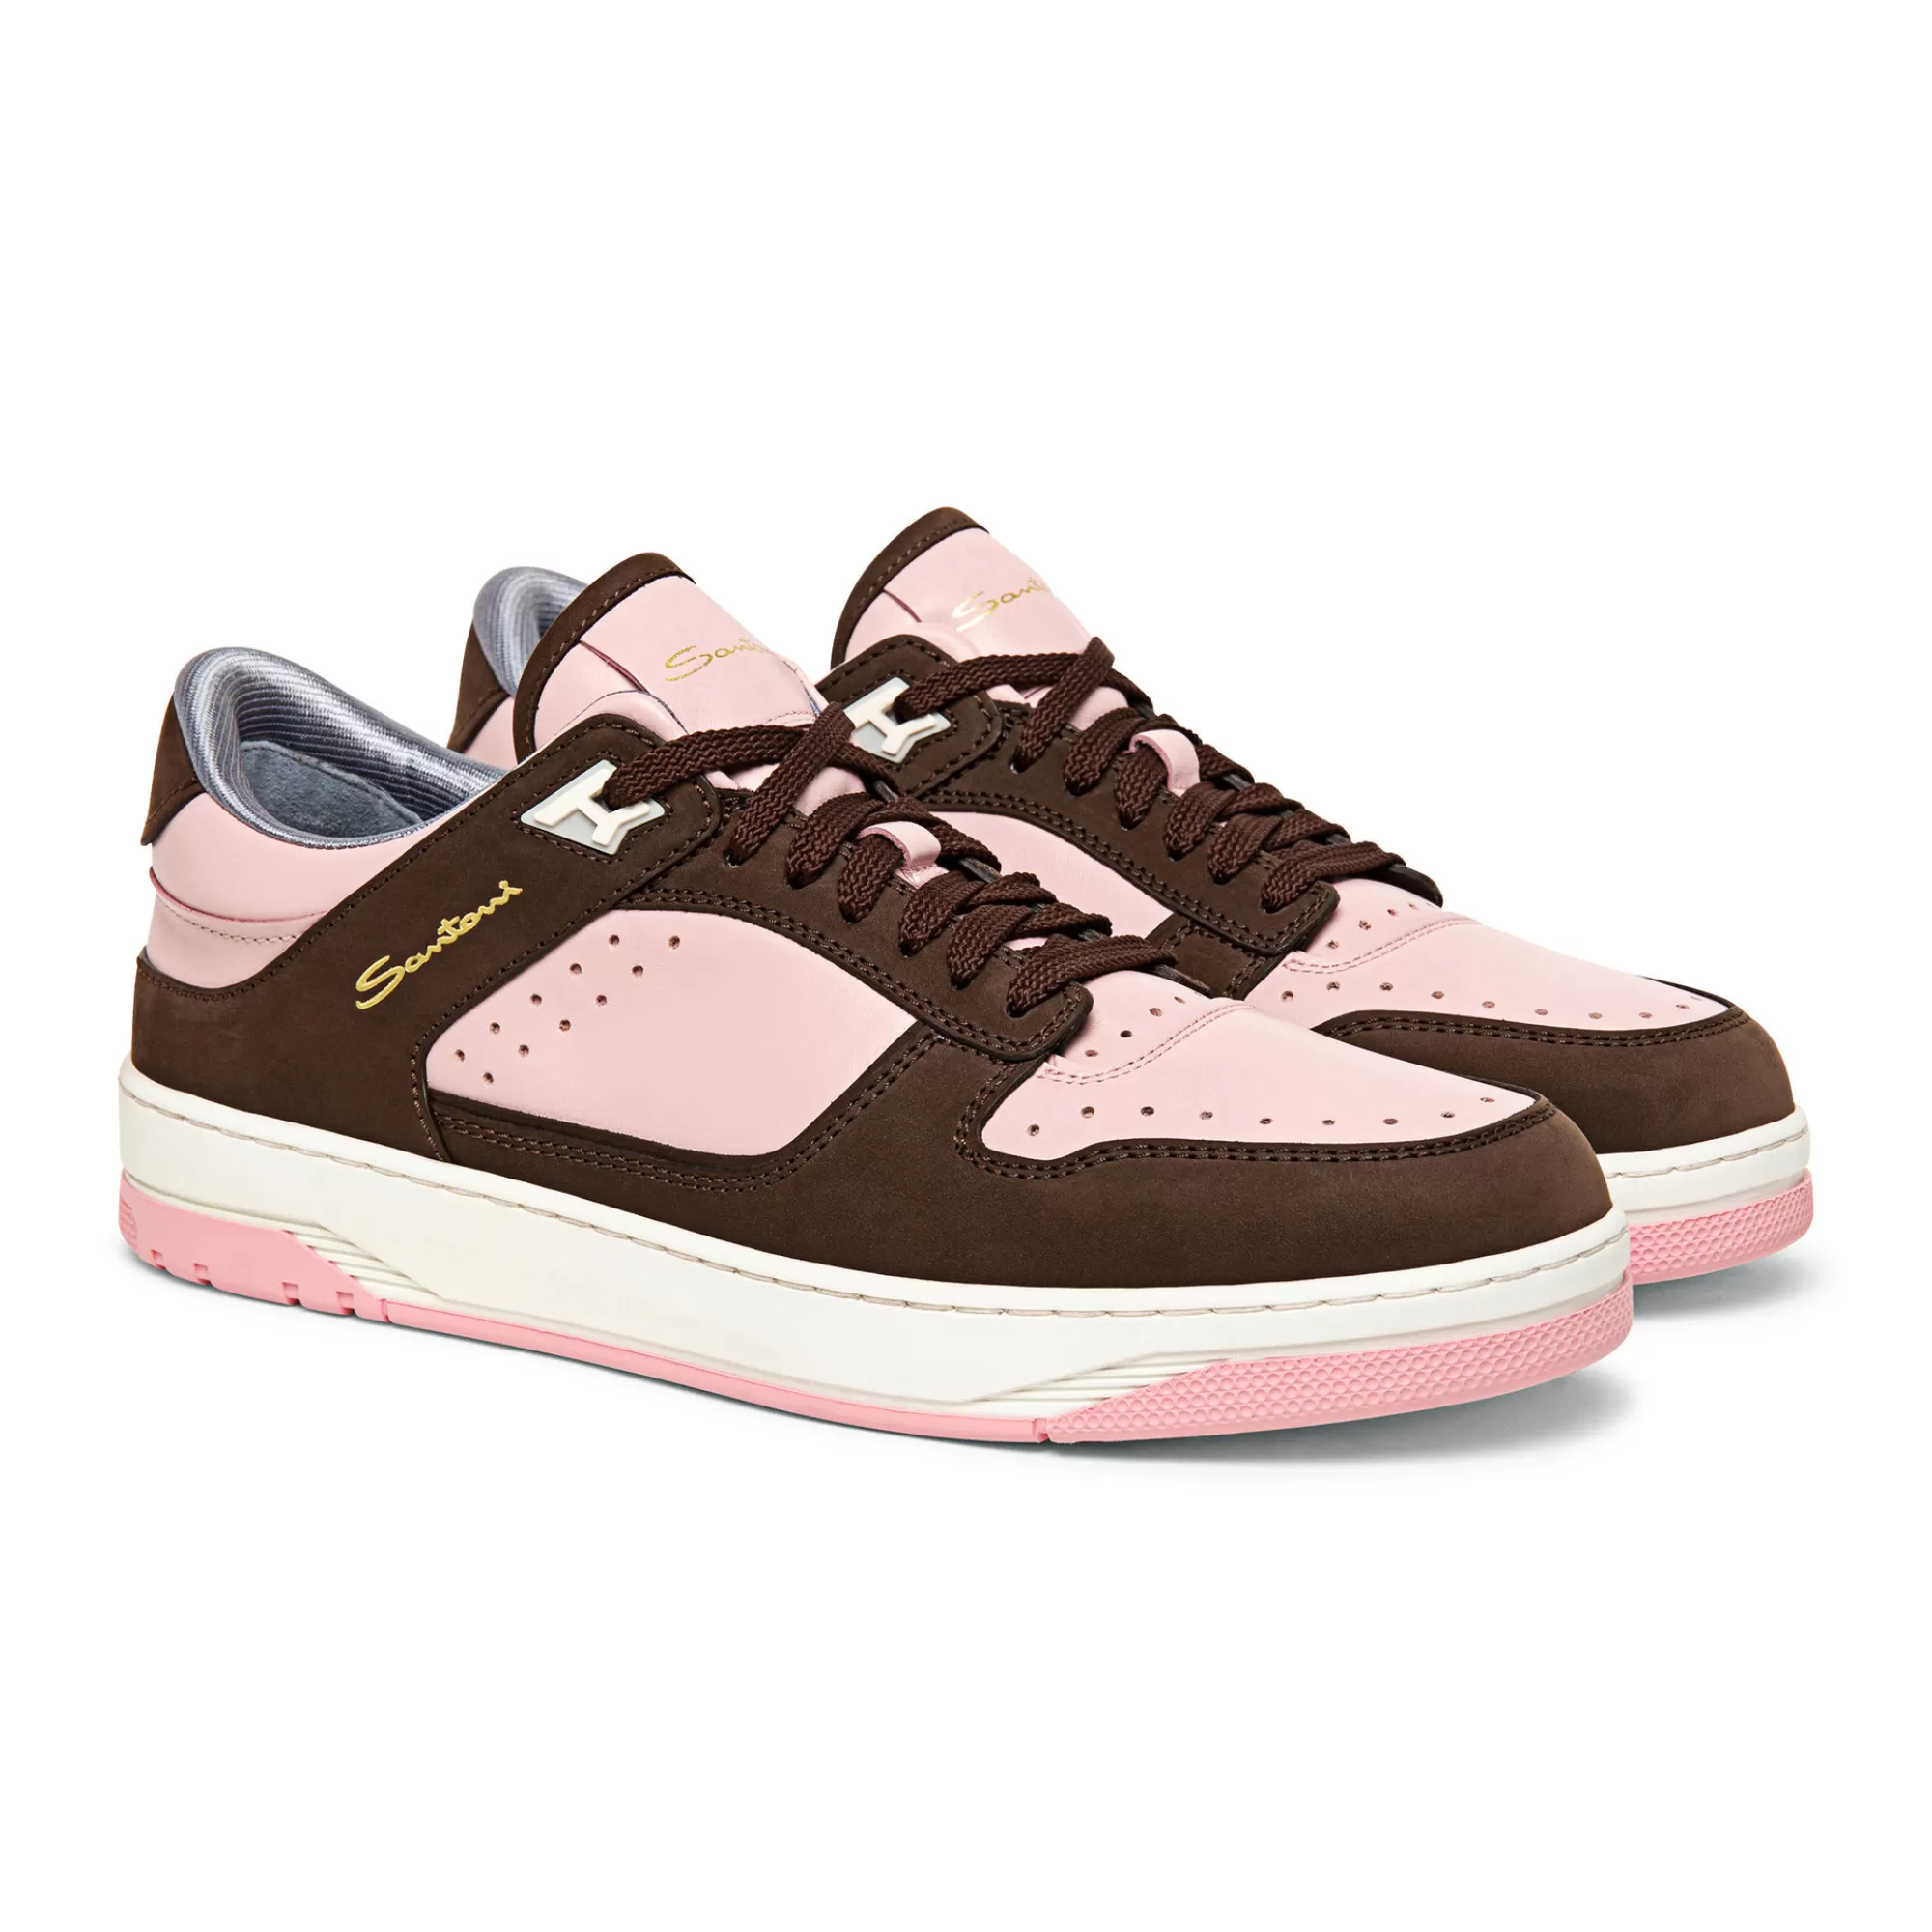 Clearance Sneaker Sneak-Air da uomo in pelle e nabuk rosa e marrone Vedi tutte le calzature | Sneakers